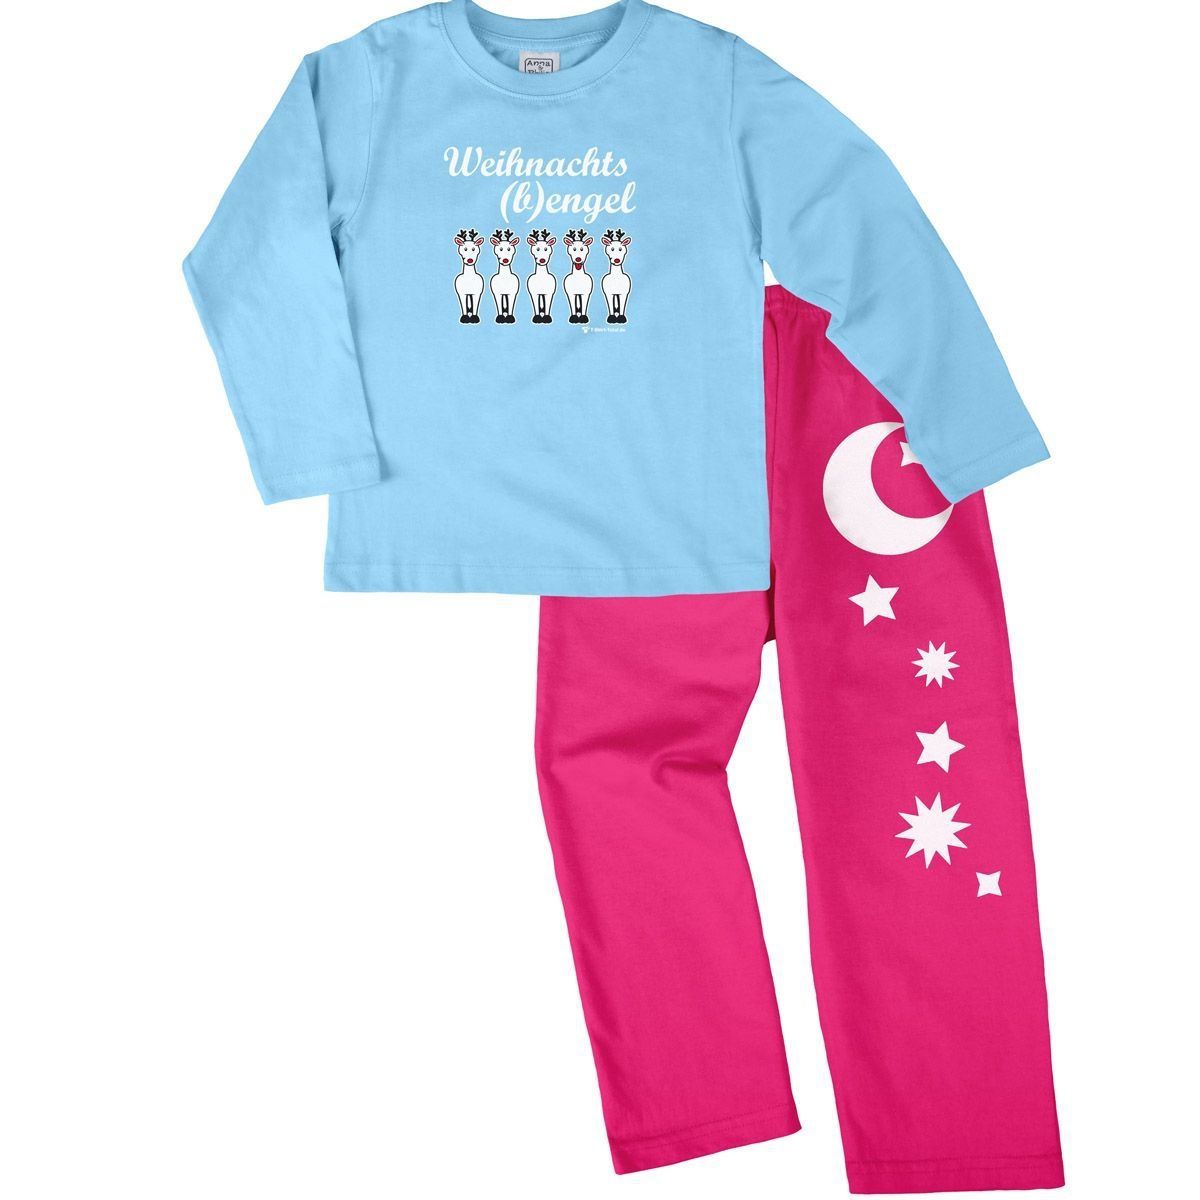 Weihnachtsbengel Pyjama Set hellblau / pink 110 / 116